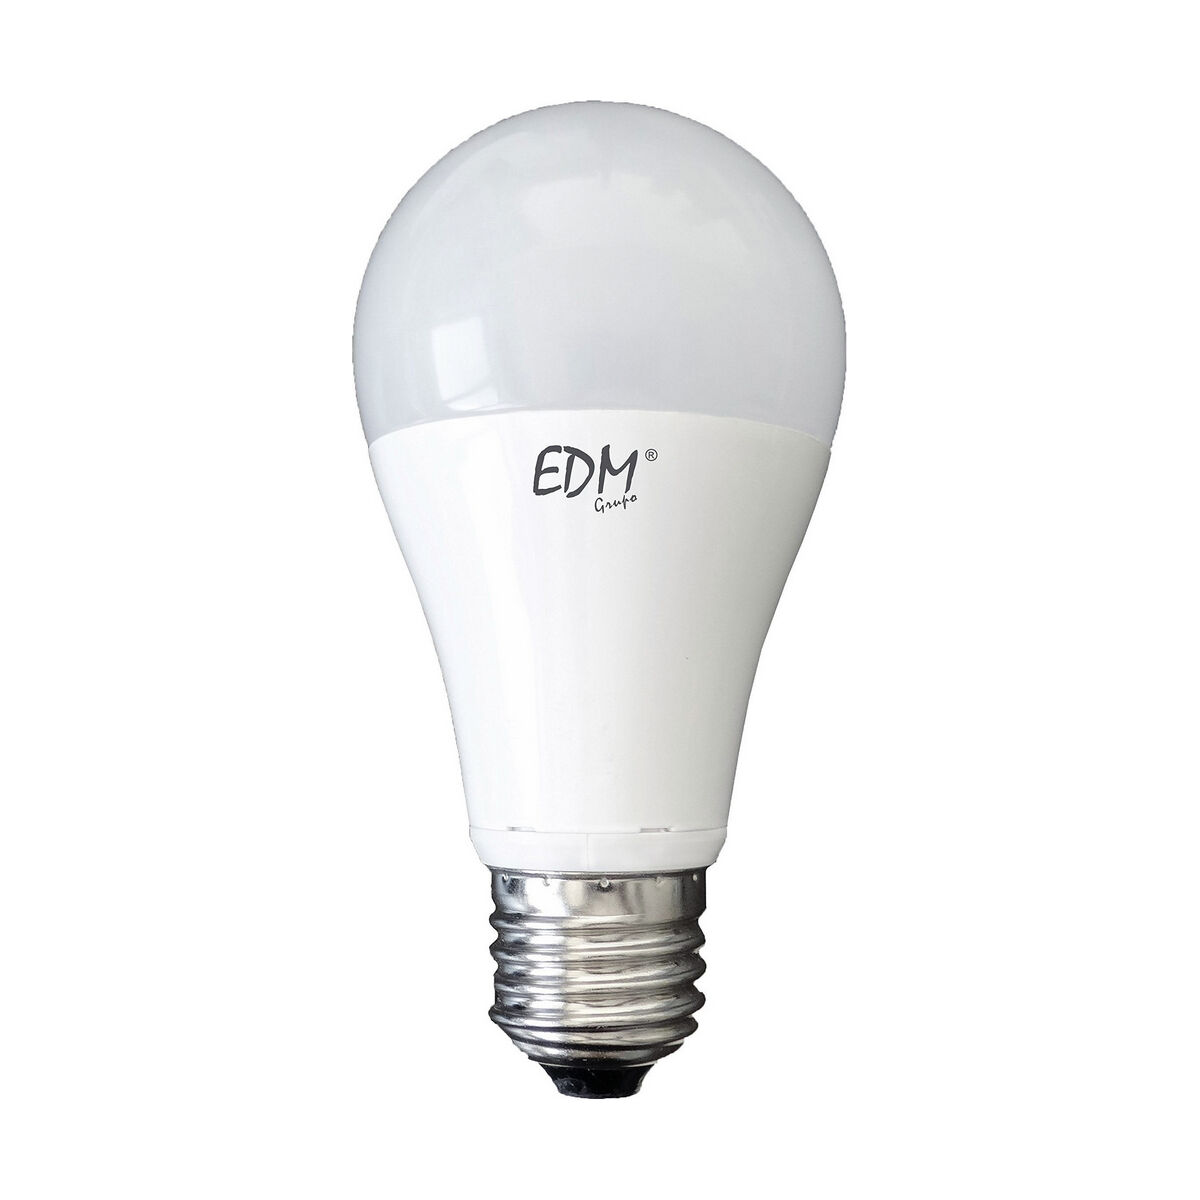 Lampadina LED EDM E27 15 W F 1521 Lm (3200 K)